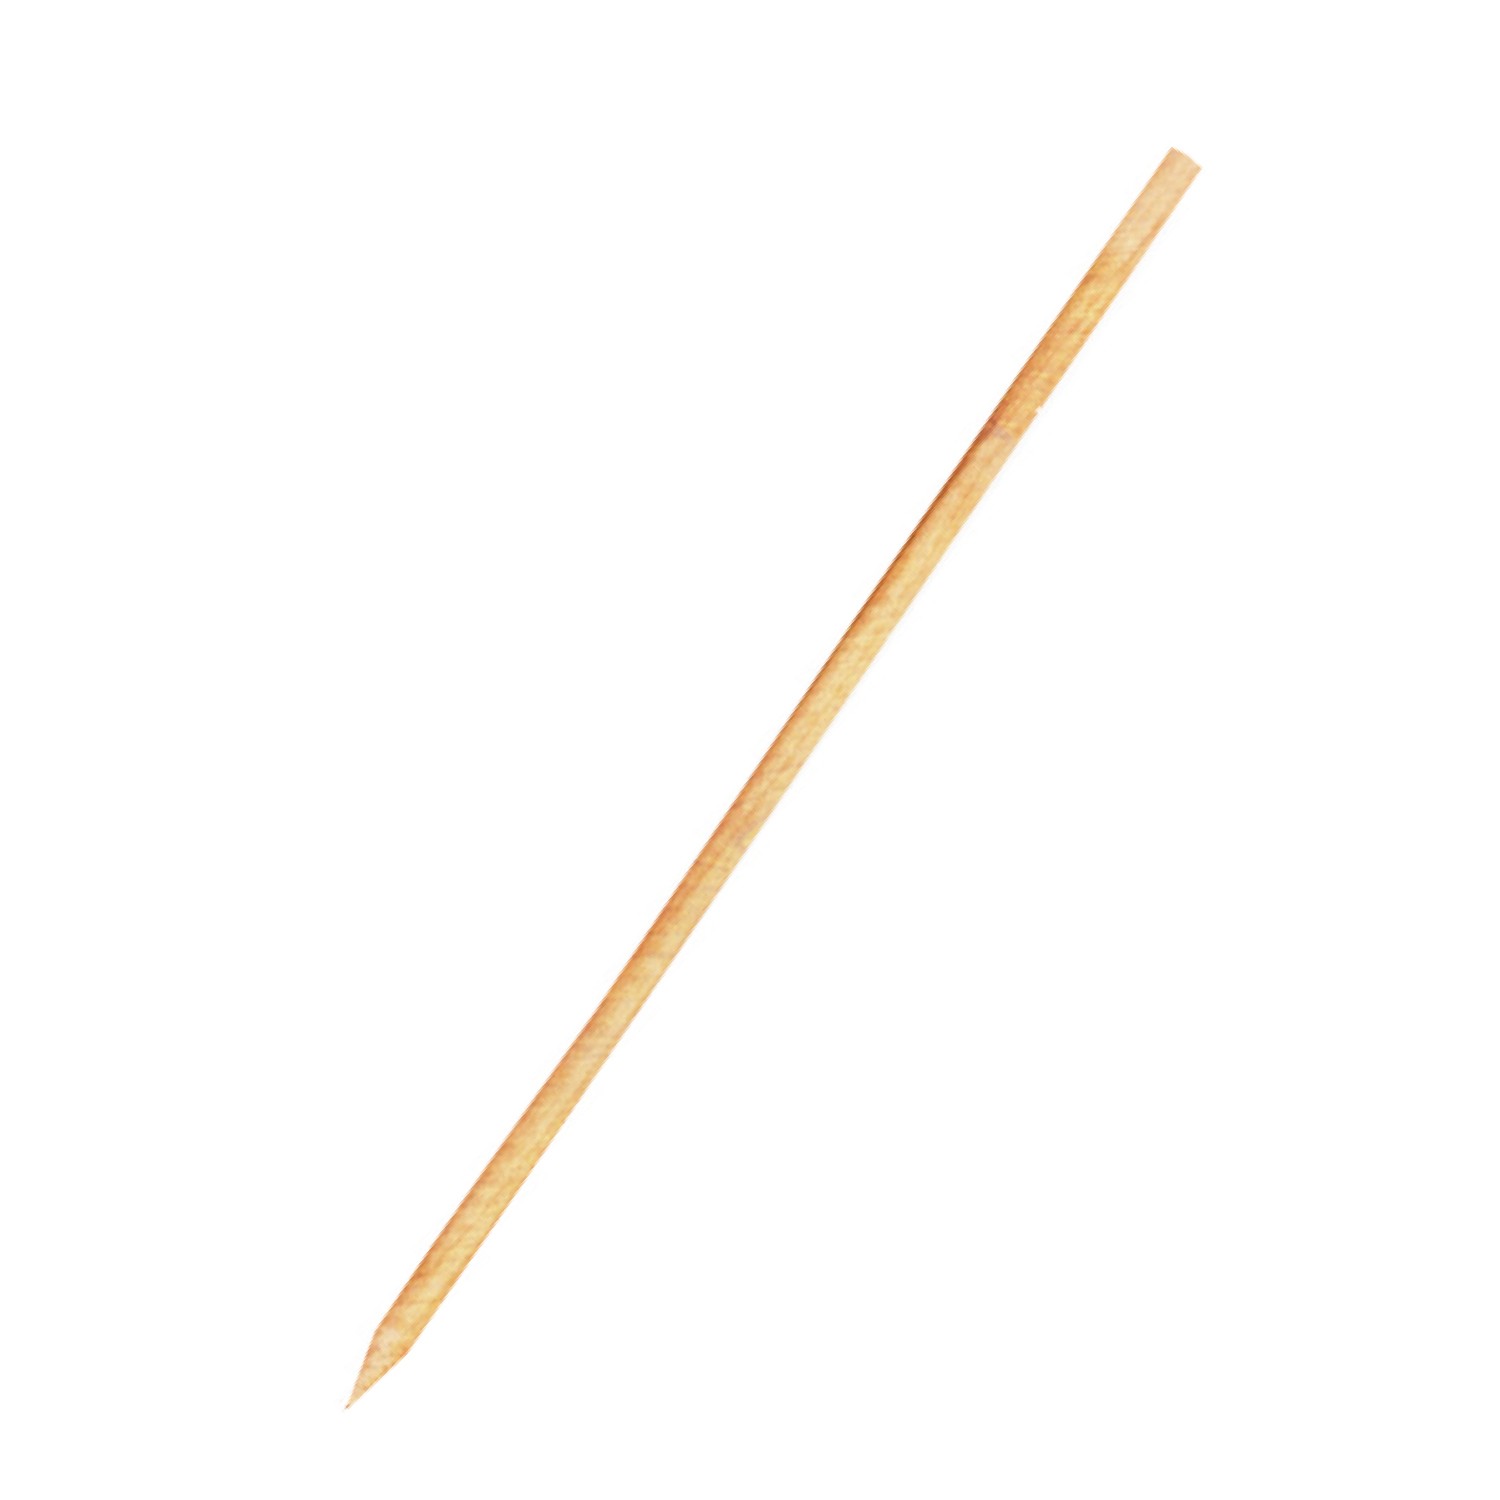 Bambusové špajdle ostré 30 cm, Ø 3 mm [200 ks]